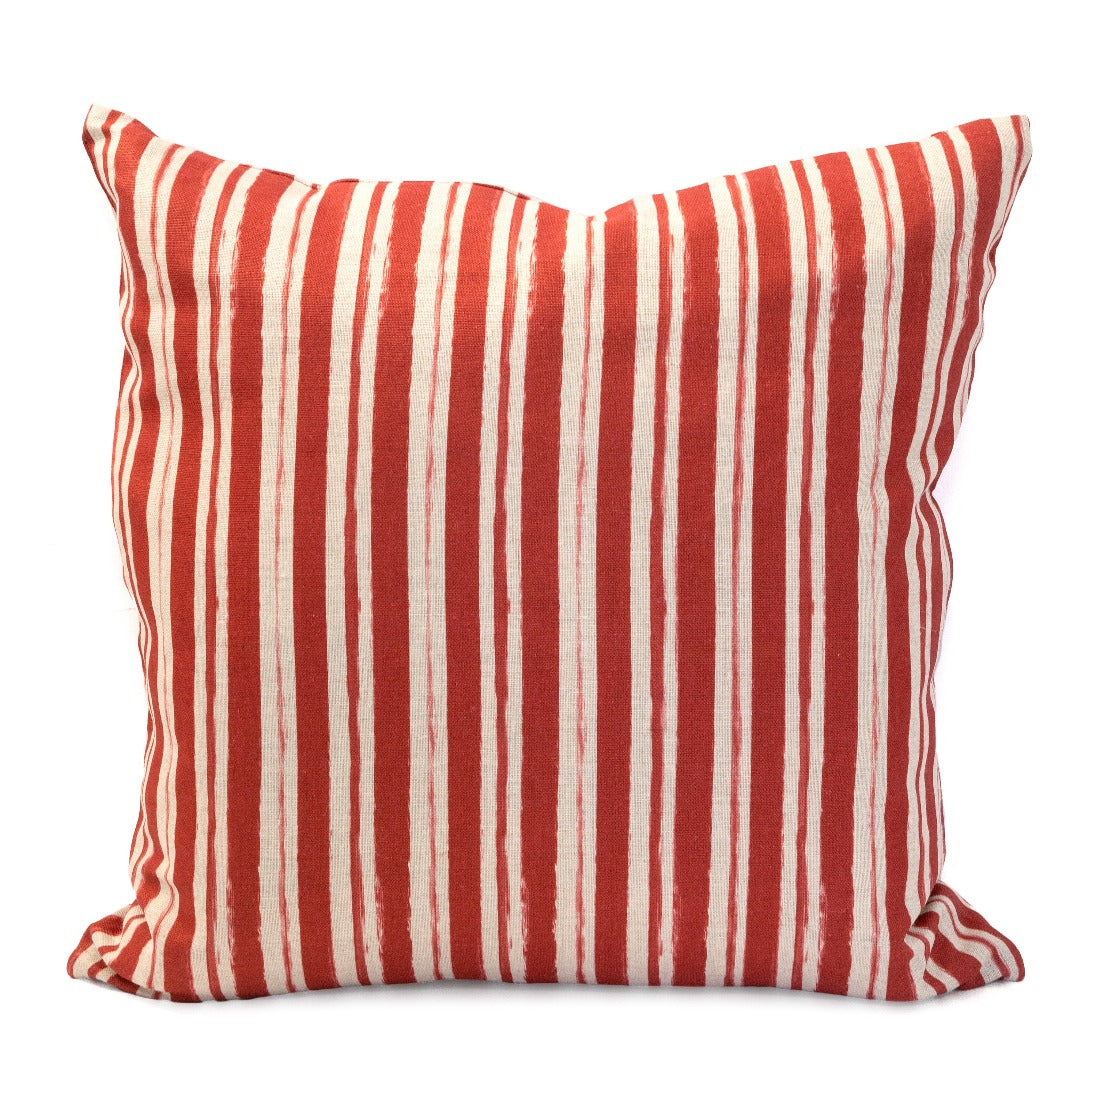 Painterly Stripe Pillow, Natural Linen